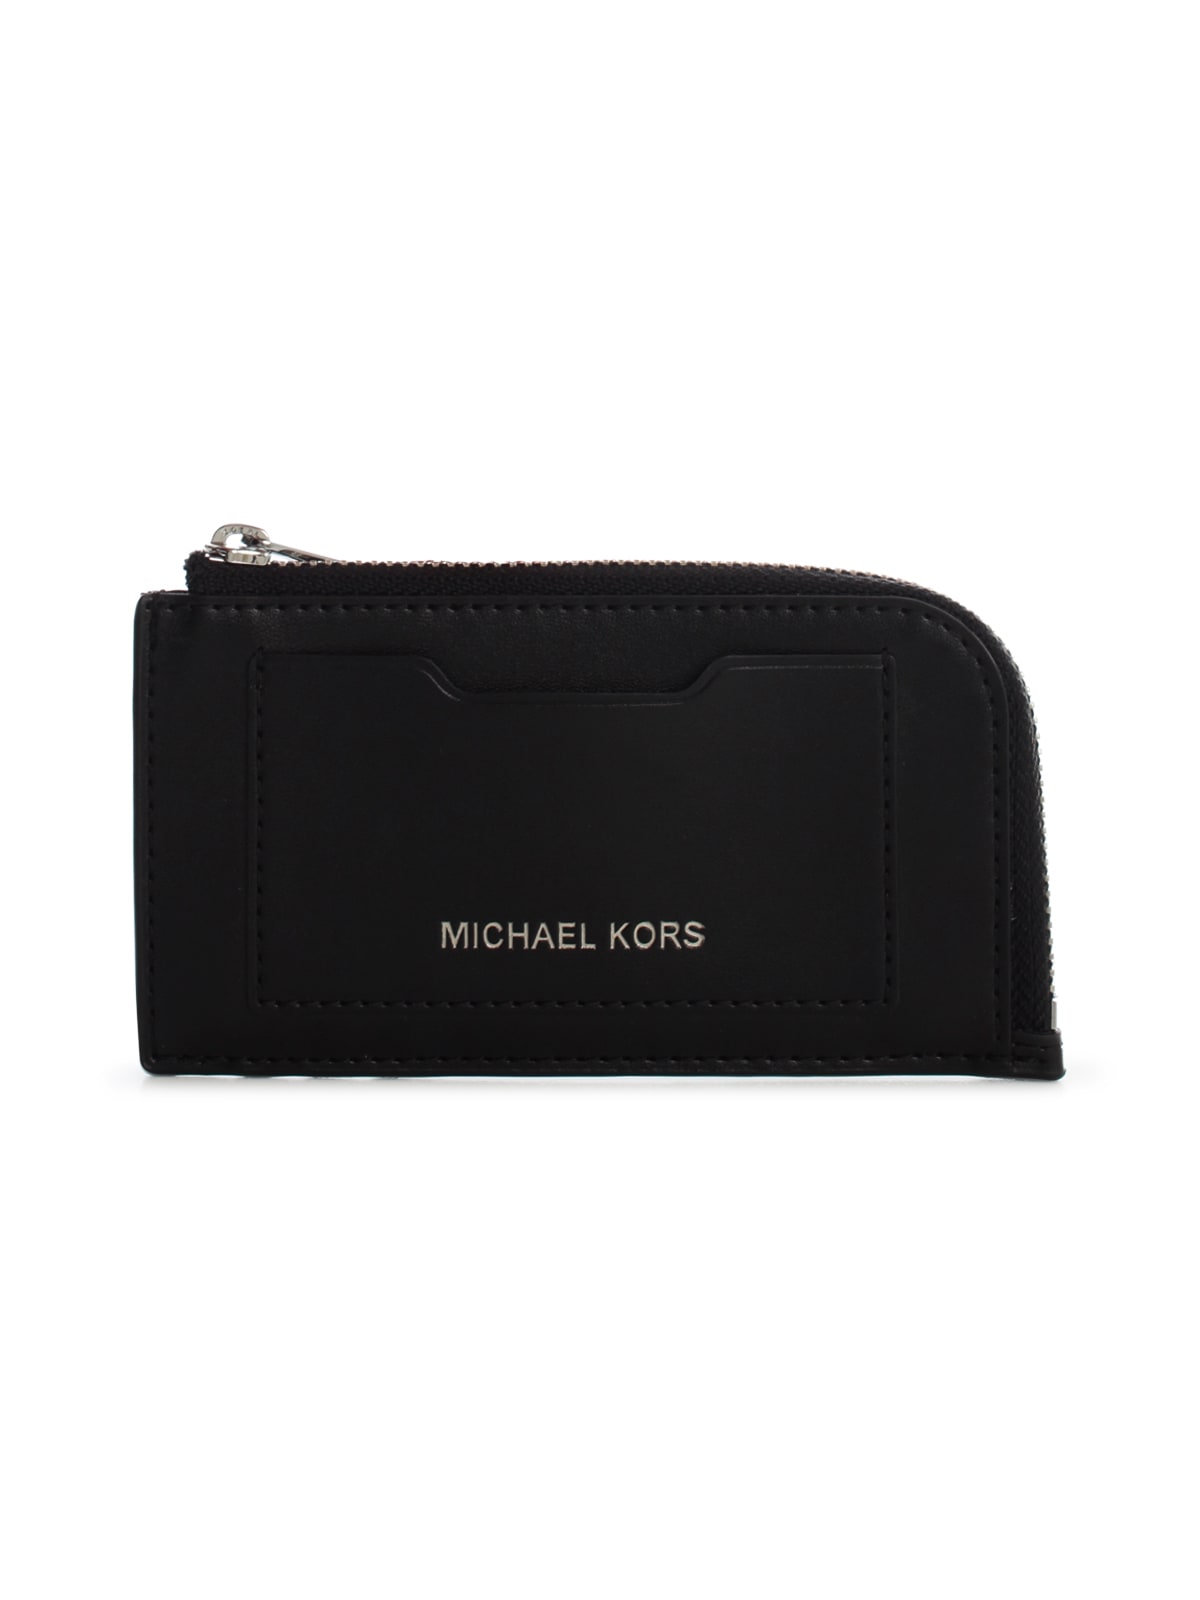 Michael Kors Solid Smooth Lthr L Zip Wallet